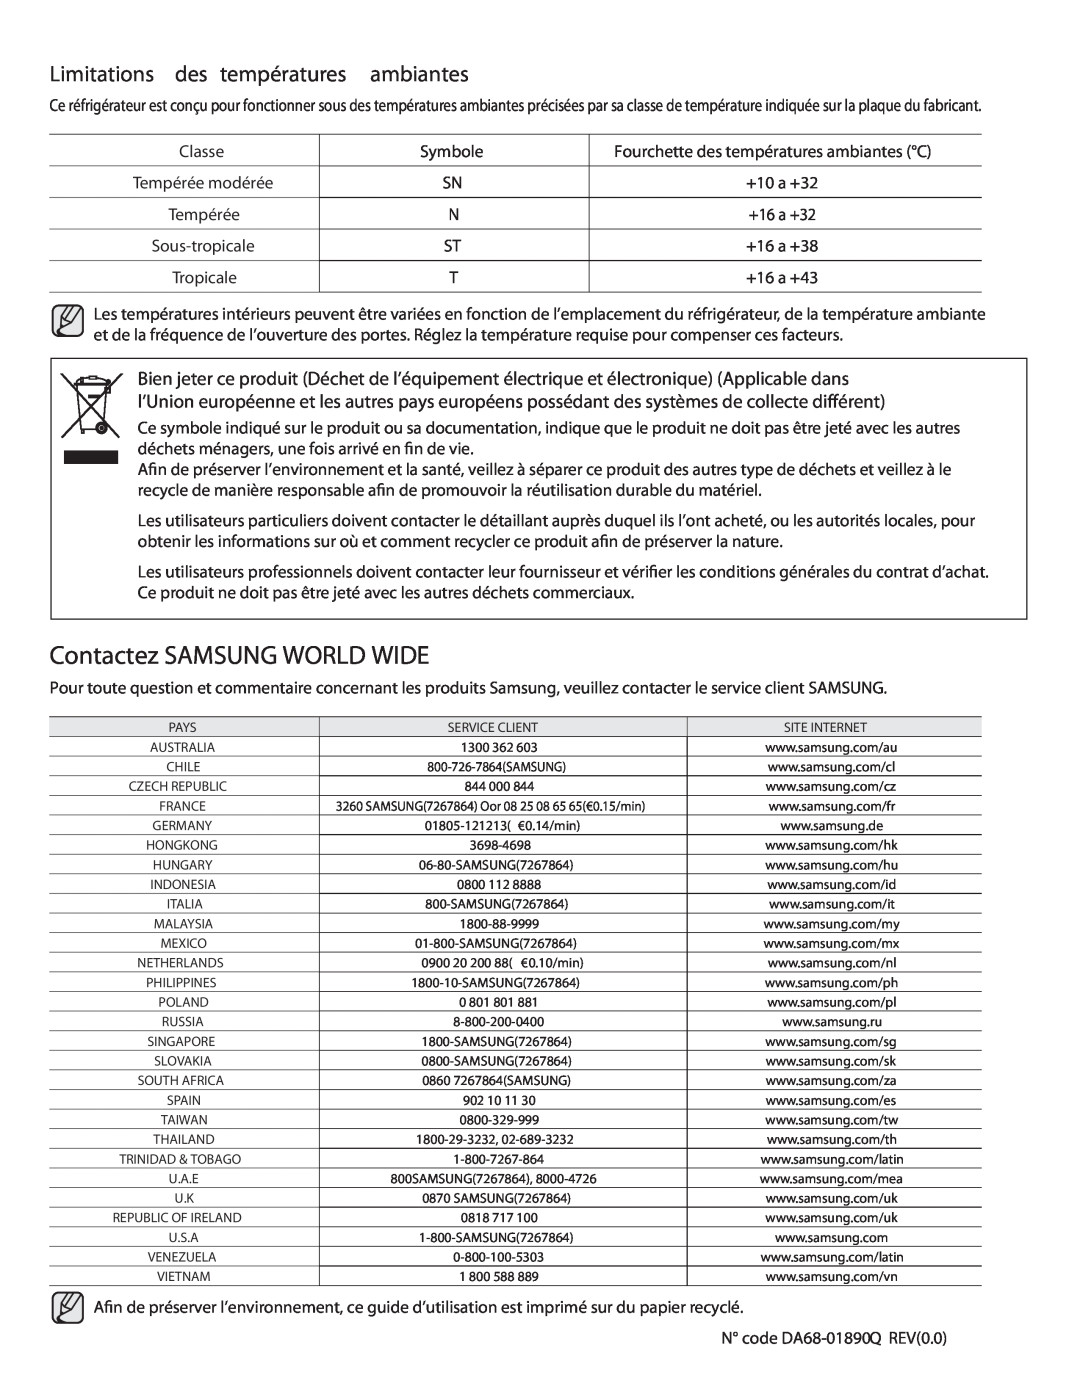 Samsung DA68-01890Q user manual Contactez SAMSUNG WORLD WIDE, Limitations des températures ambiantes, Classe, Symbole 